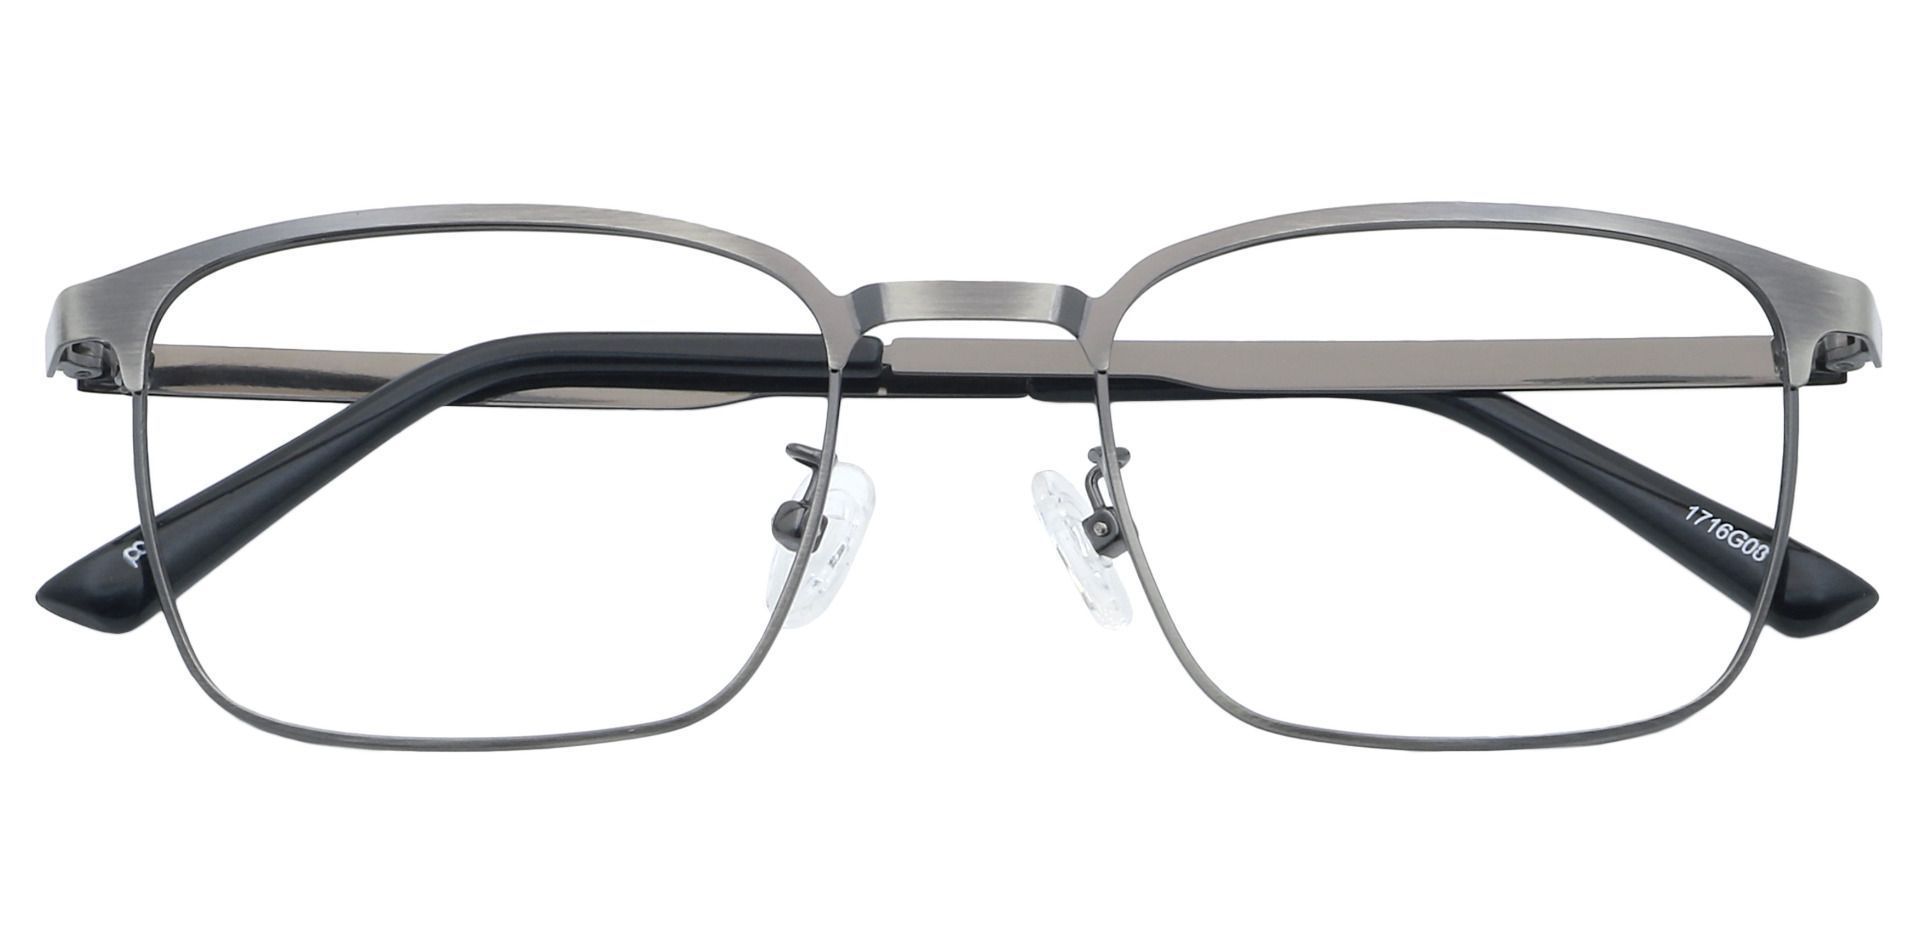 Kingston Square Progressive Glasses - Gray